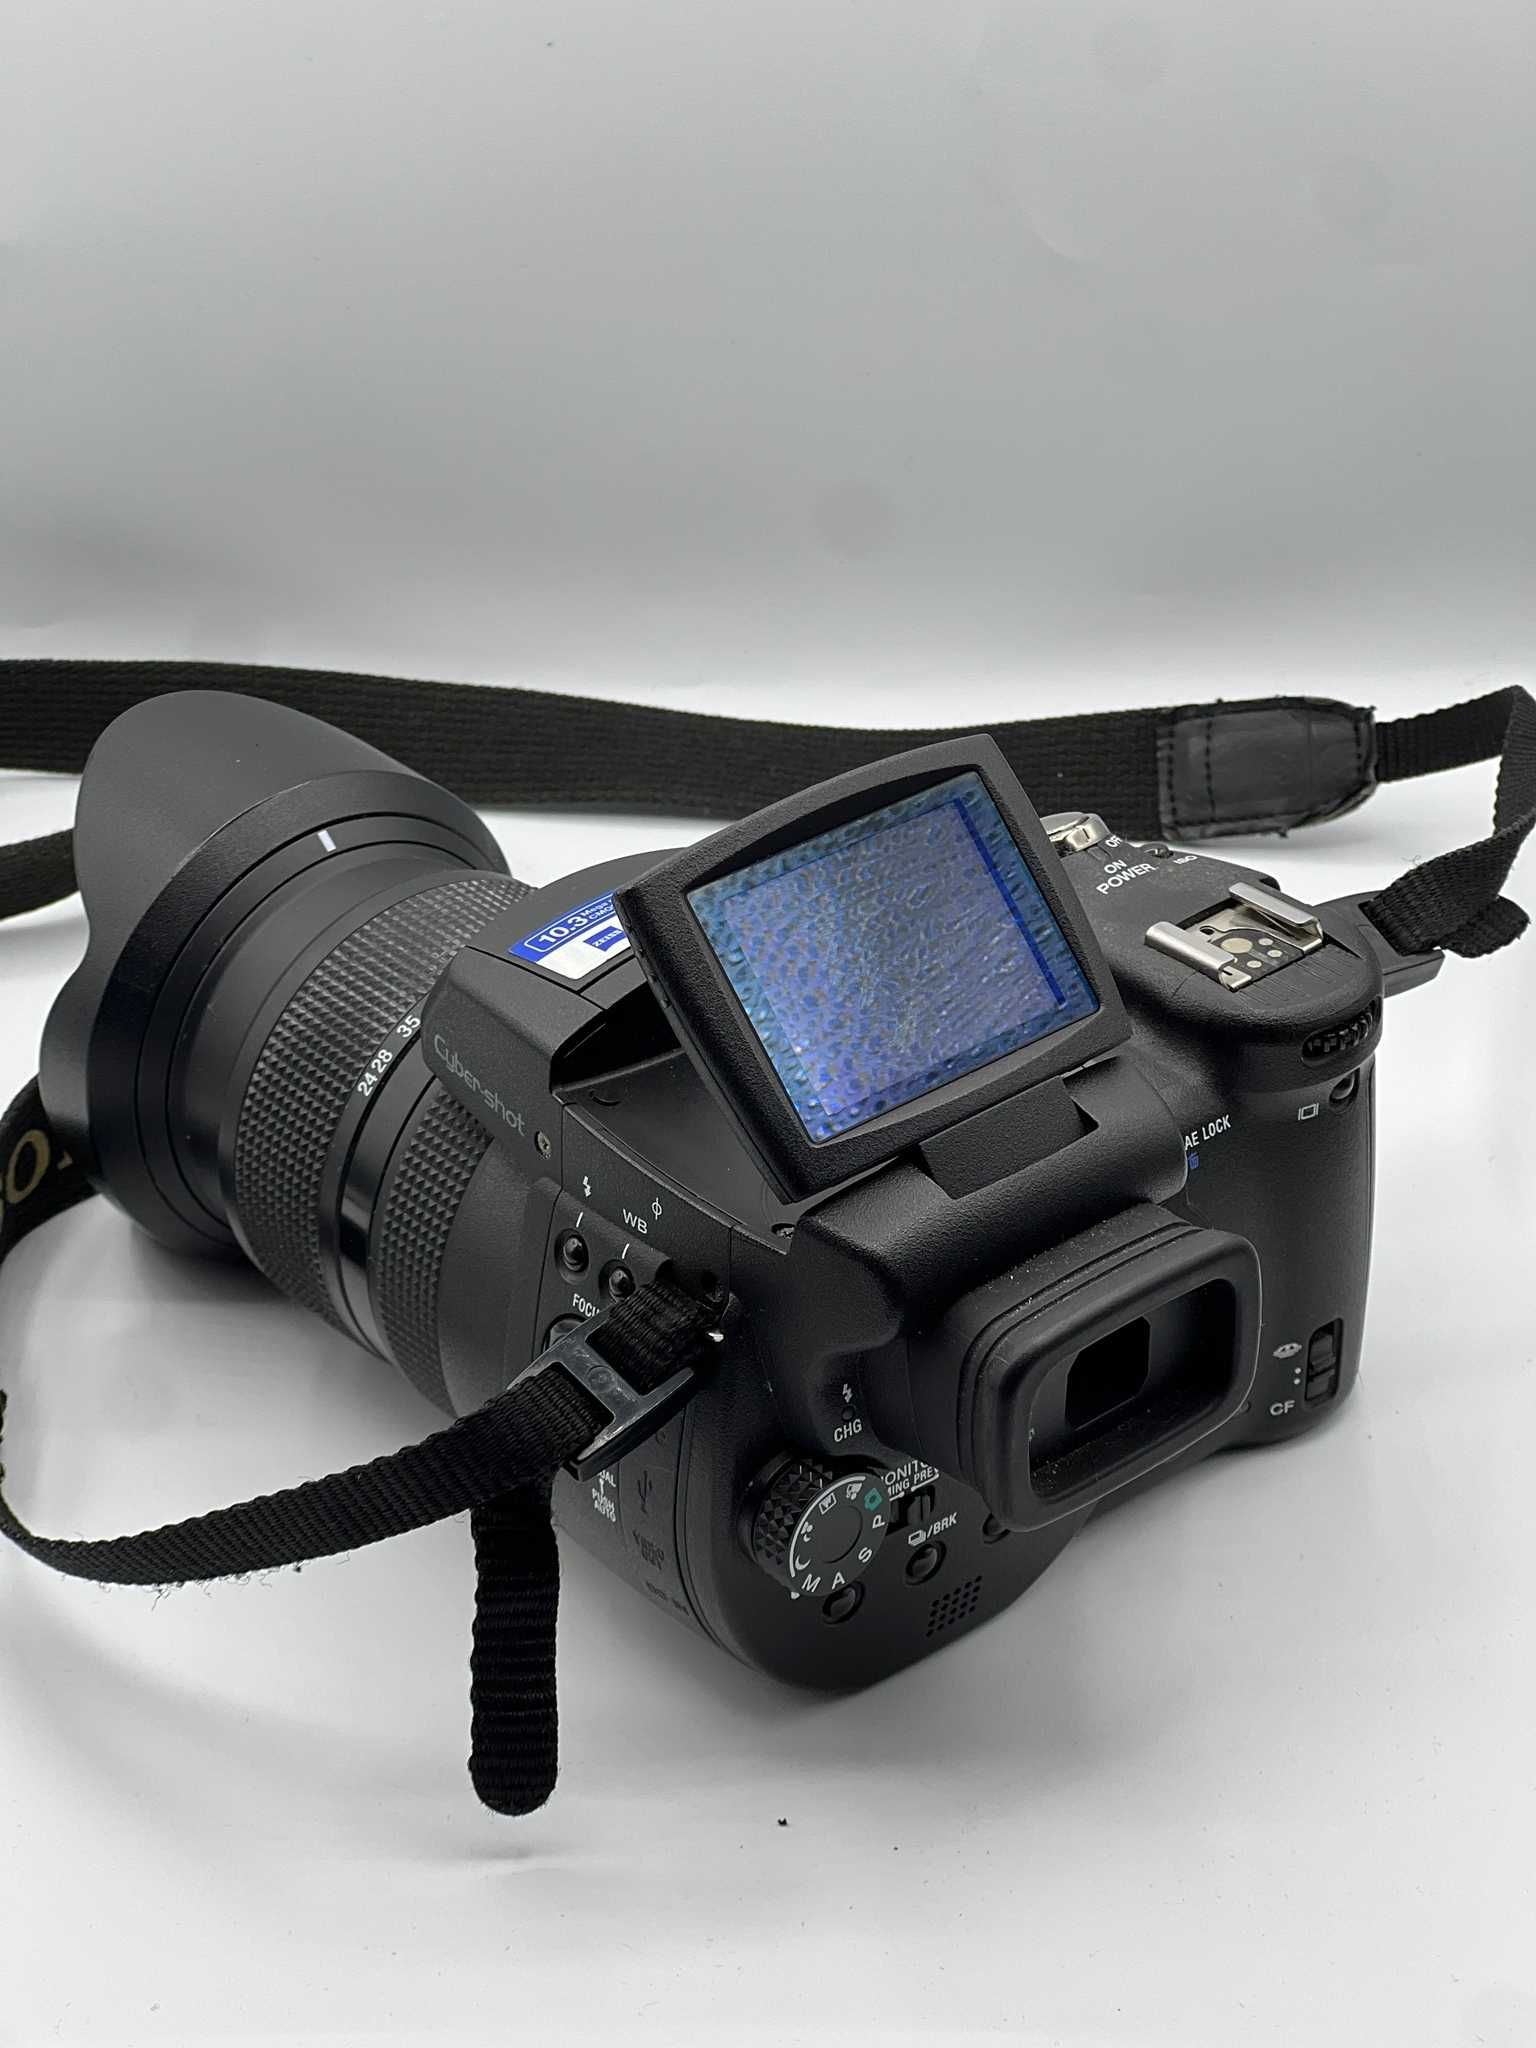 Sony Cybershot R1, 10Mpx, Carl Zeiss Vario-Sonnar T* 24-120mm